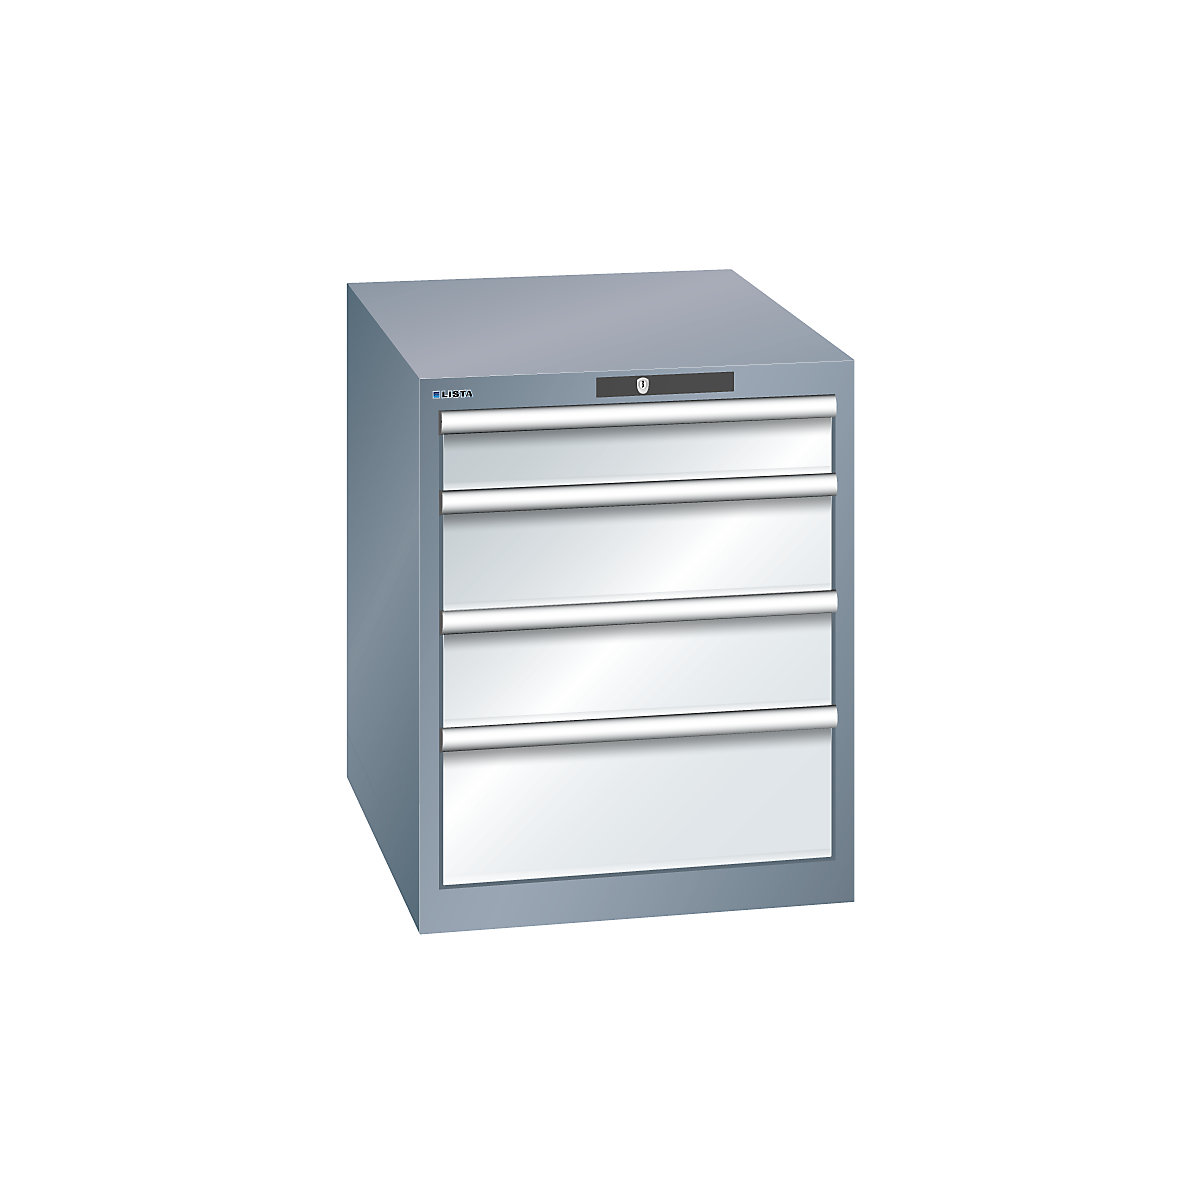 Drawer cupboard, 4 drawers – LISTA, WxDxH 564 x 724 x 700 mm, grey metallic / light grey-12